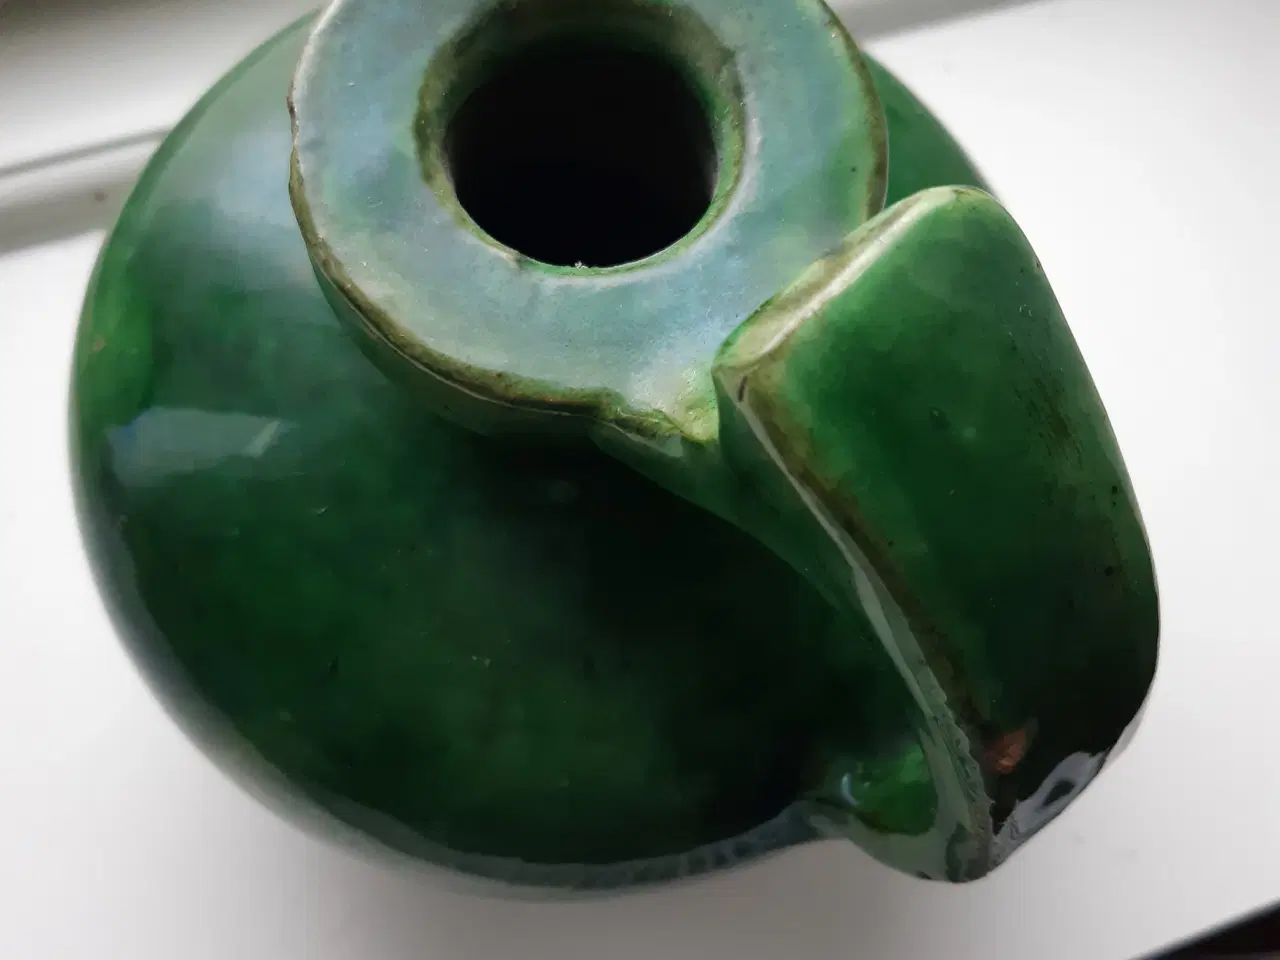 Billede 4 - Kugleformet keramikvase med smal hals